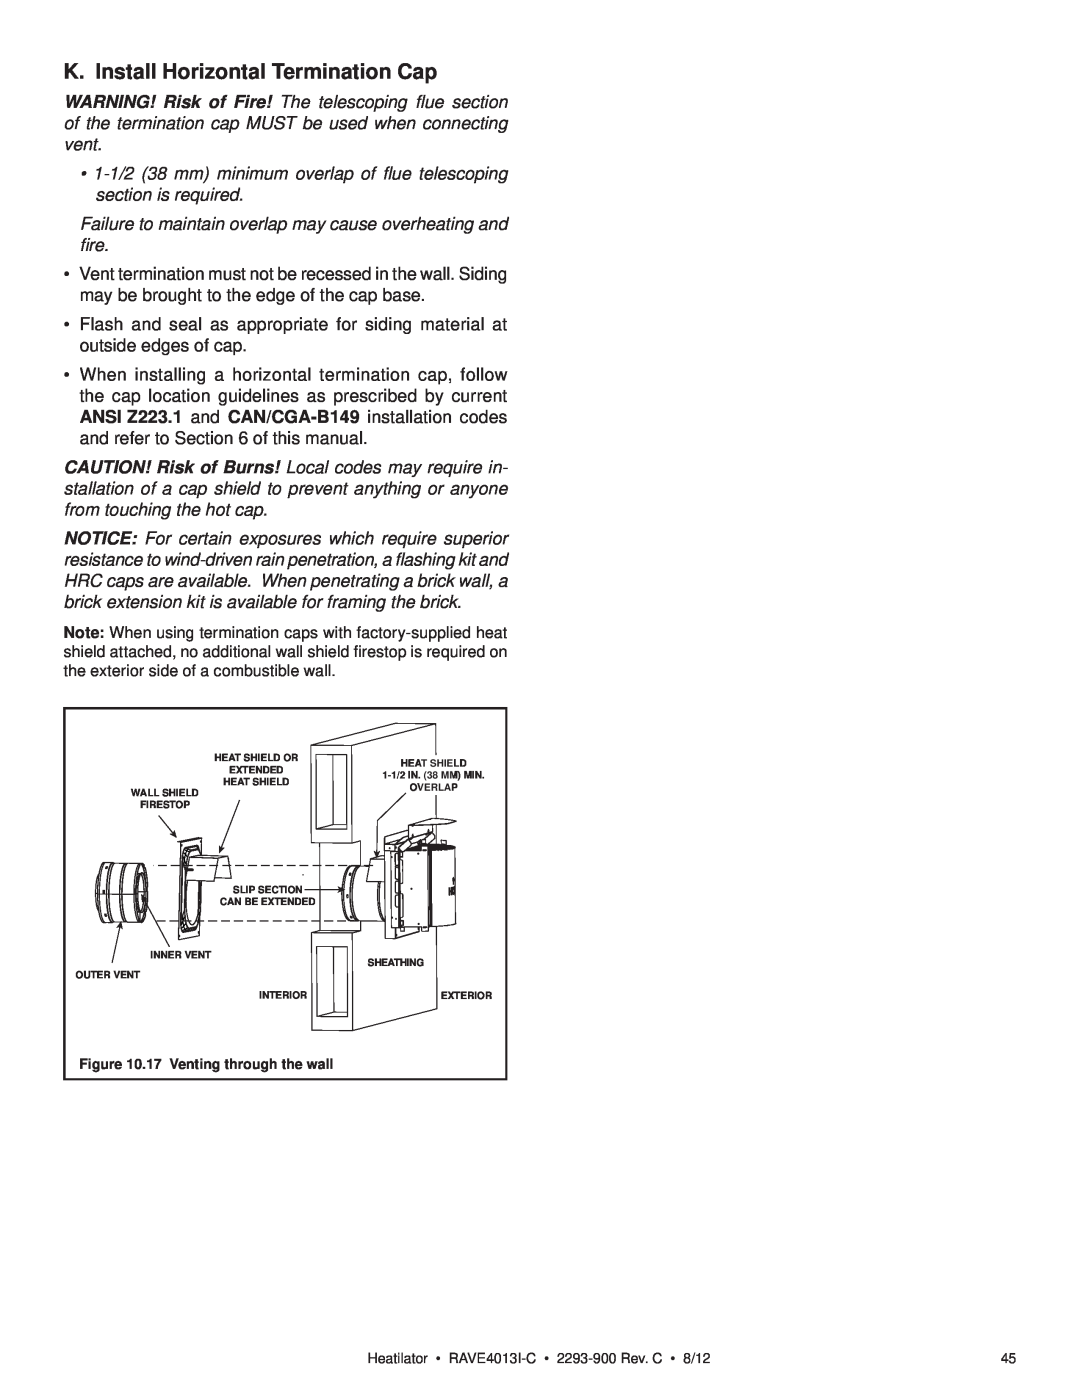 Heatiator Rave4013i-c owner manual K. Install Horizontal Termination Cap, 17 Venting through the wall 